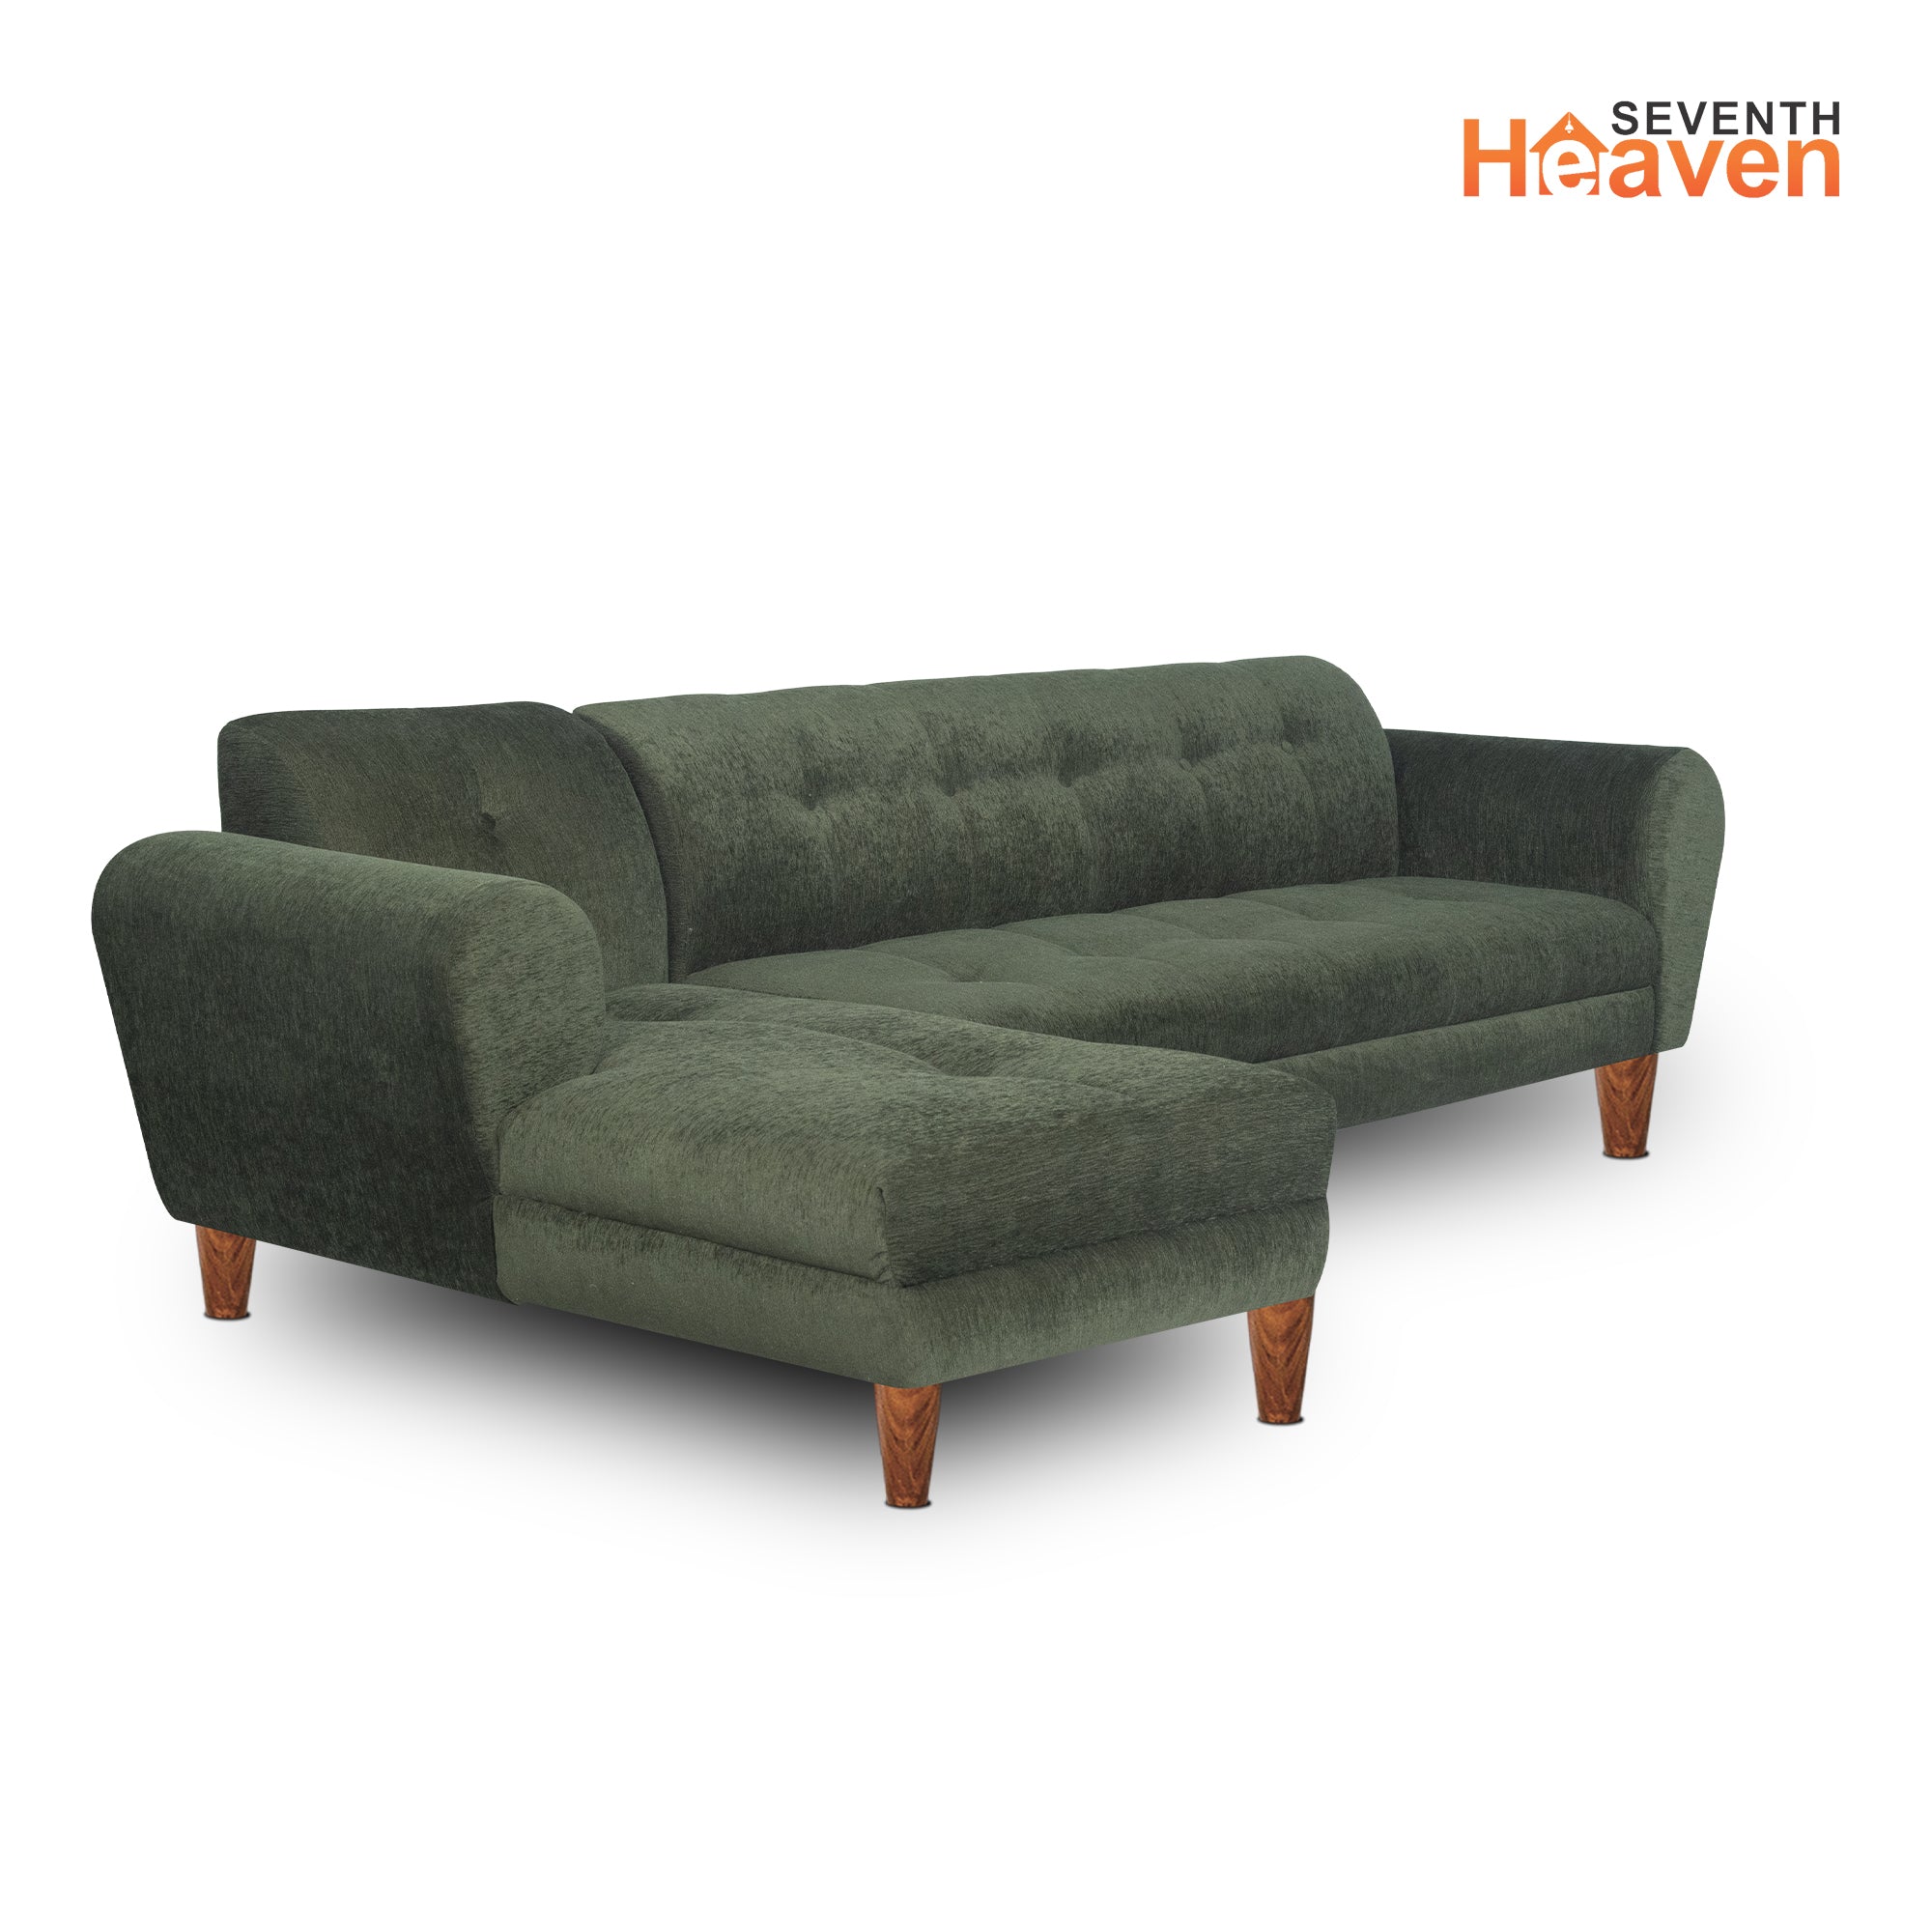 Seventh Heaven Milan 6 Seater Sofa, Extra Spacious, Chenille Molfino Fabric: 3 Year Warranty Fabric 6 Seater Sofa  (Finish Color - Green, DIY(Do-It-Yourself))